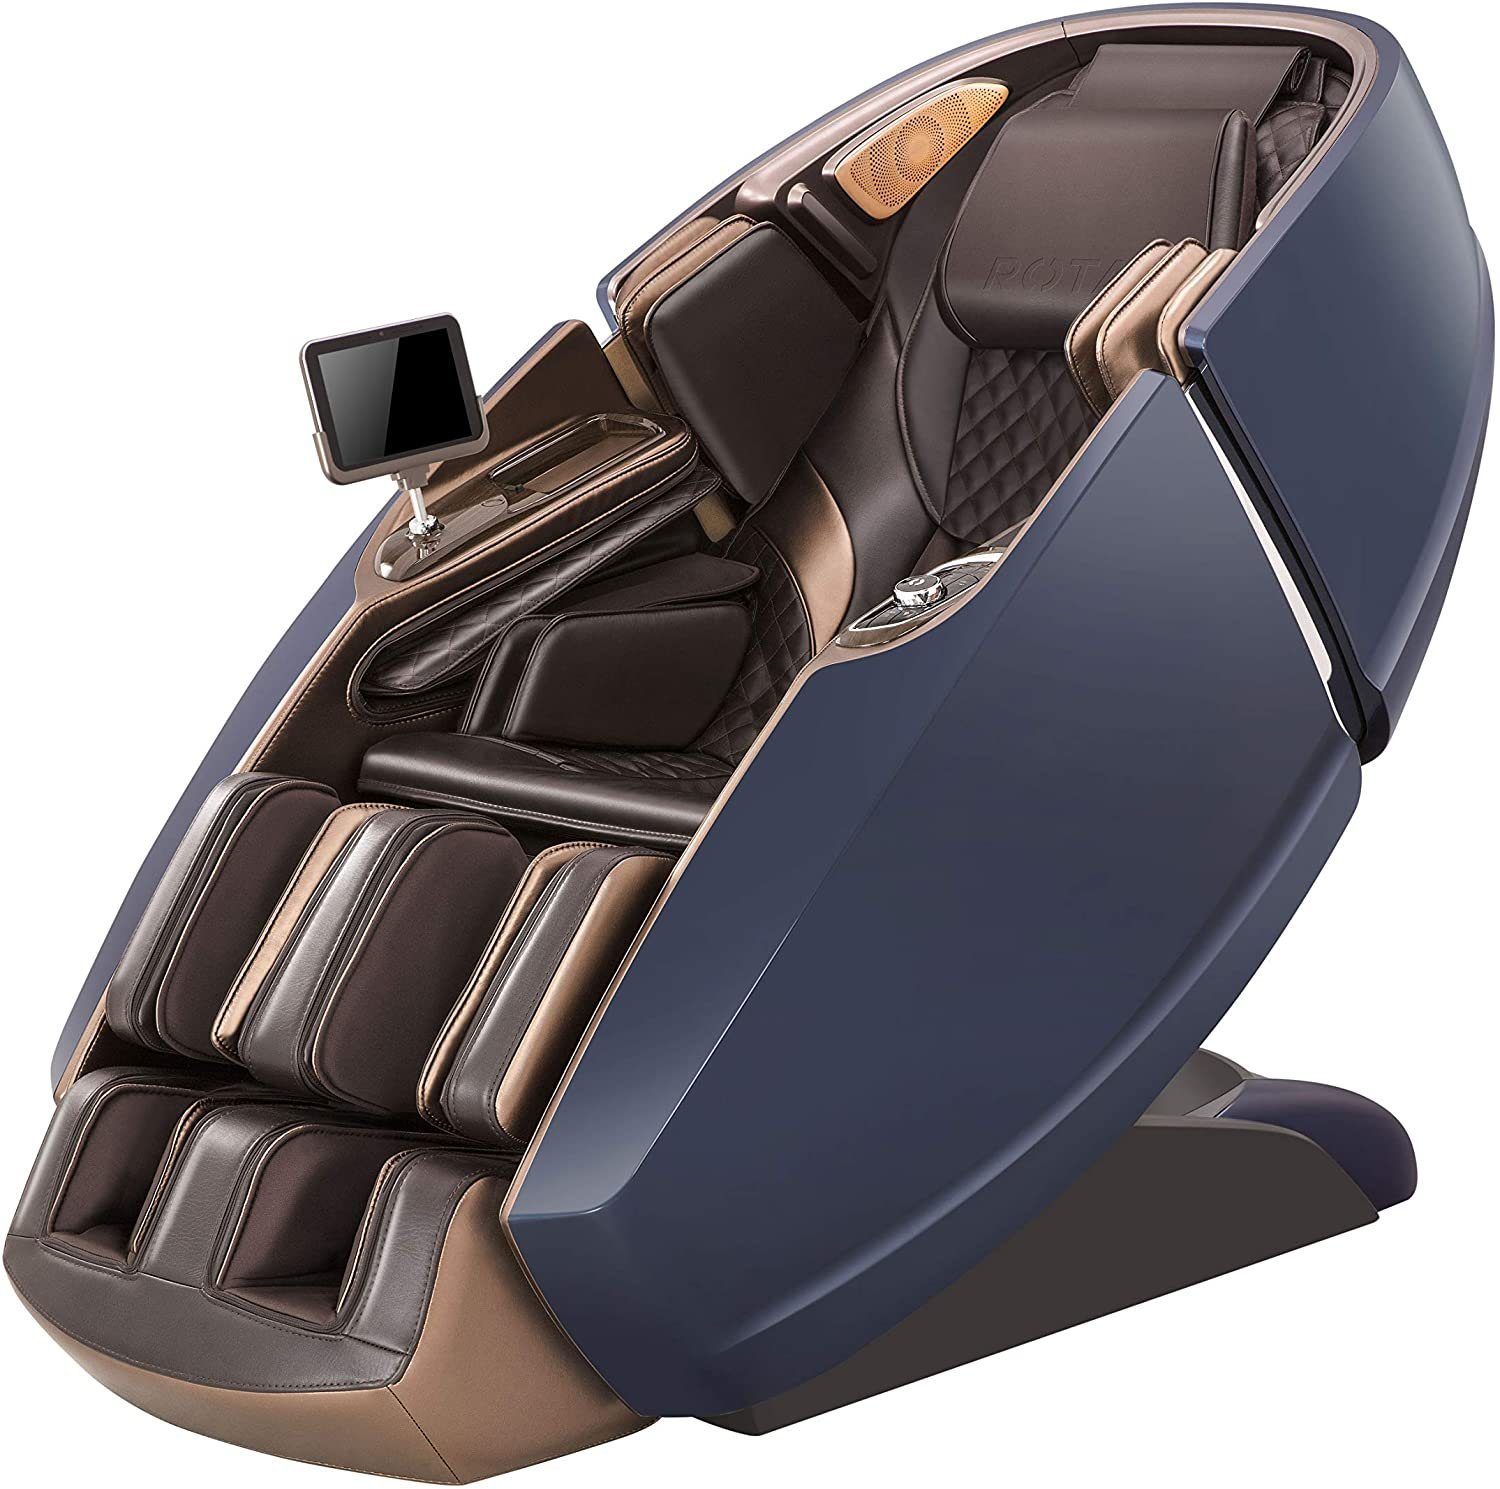 NAIPO Massagesessel, 3D High-End Massagestuhl mit Tablet, Raumkapsel-Design